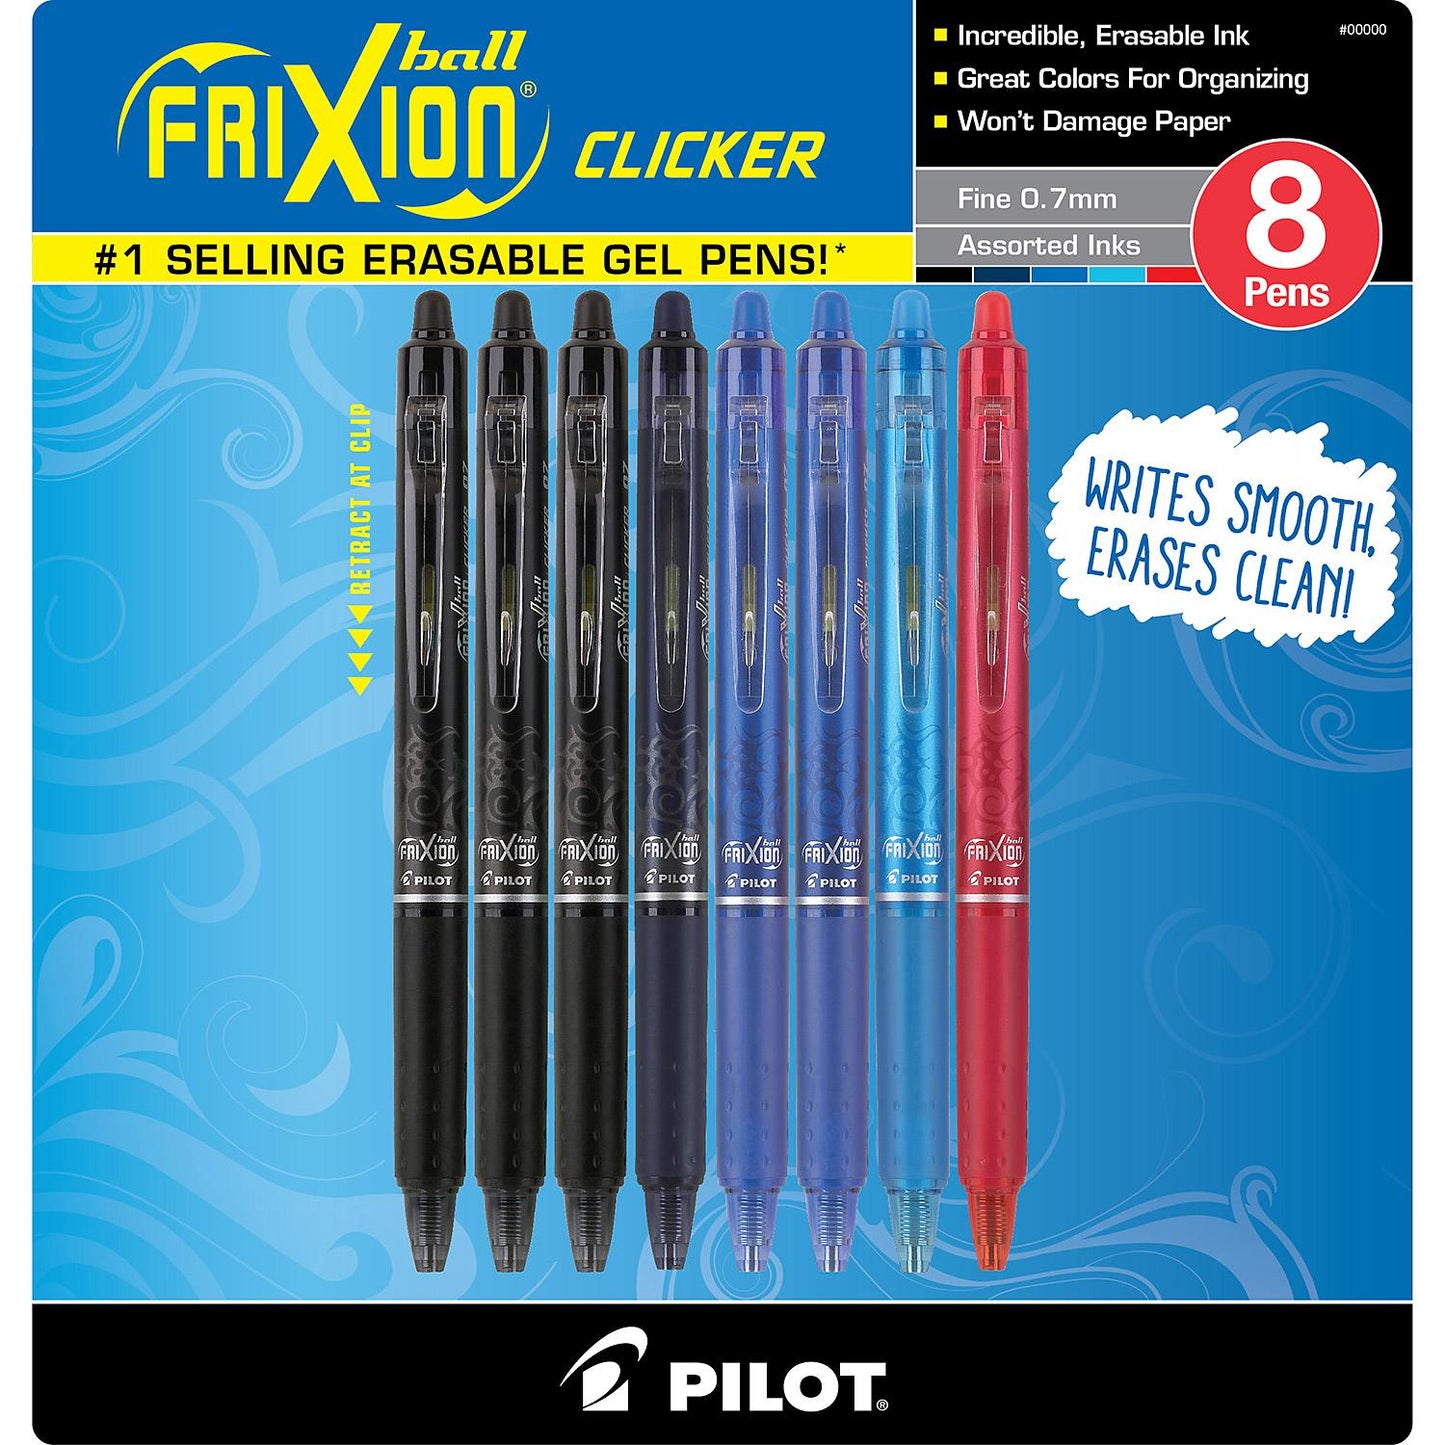 Pilot Frixion Ball Gel Pens, Erasable, Fine Point - 8 pack